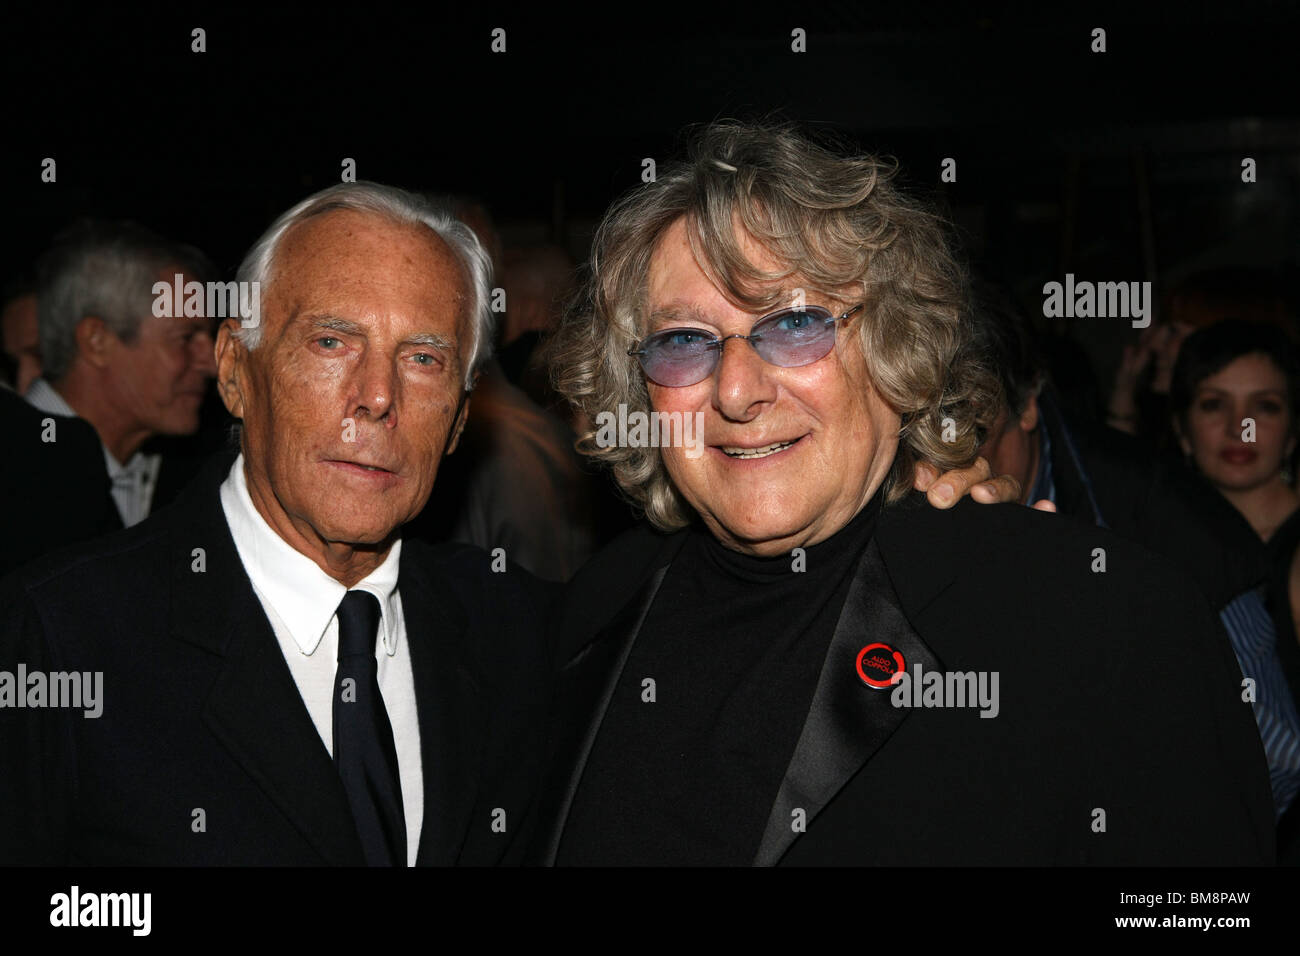 Giorgio Armani and Aldo Coppola Stock Photo - Alamy